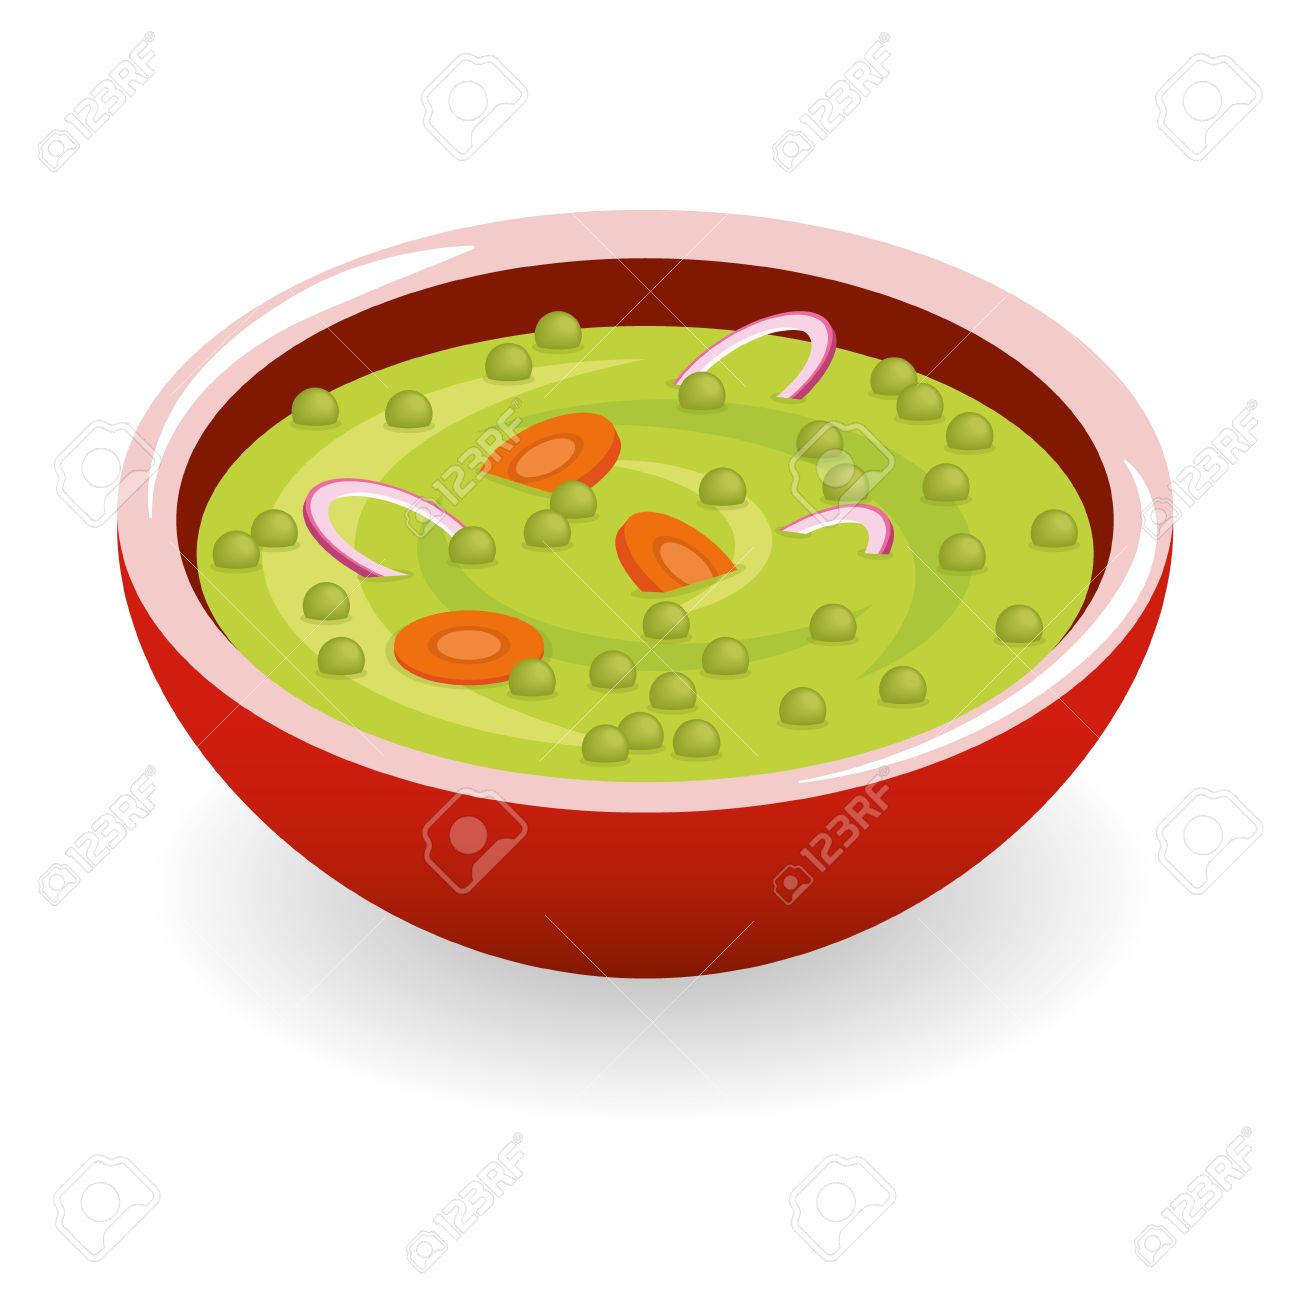 pea soup clipart cliparts download images 32627